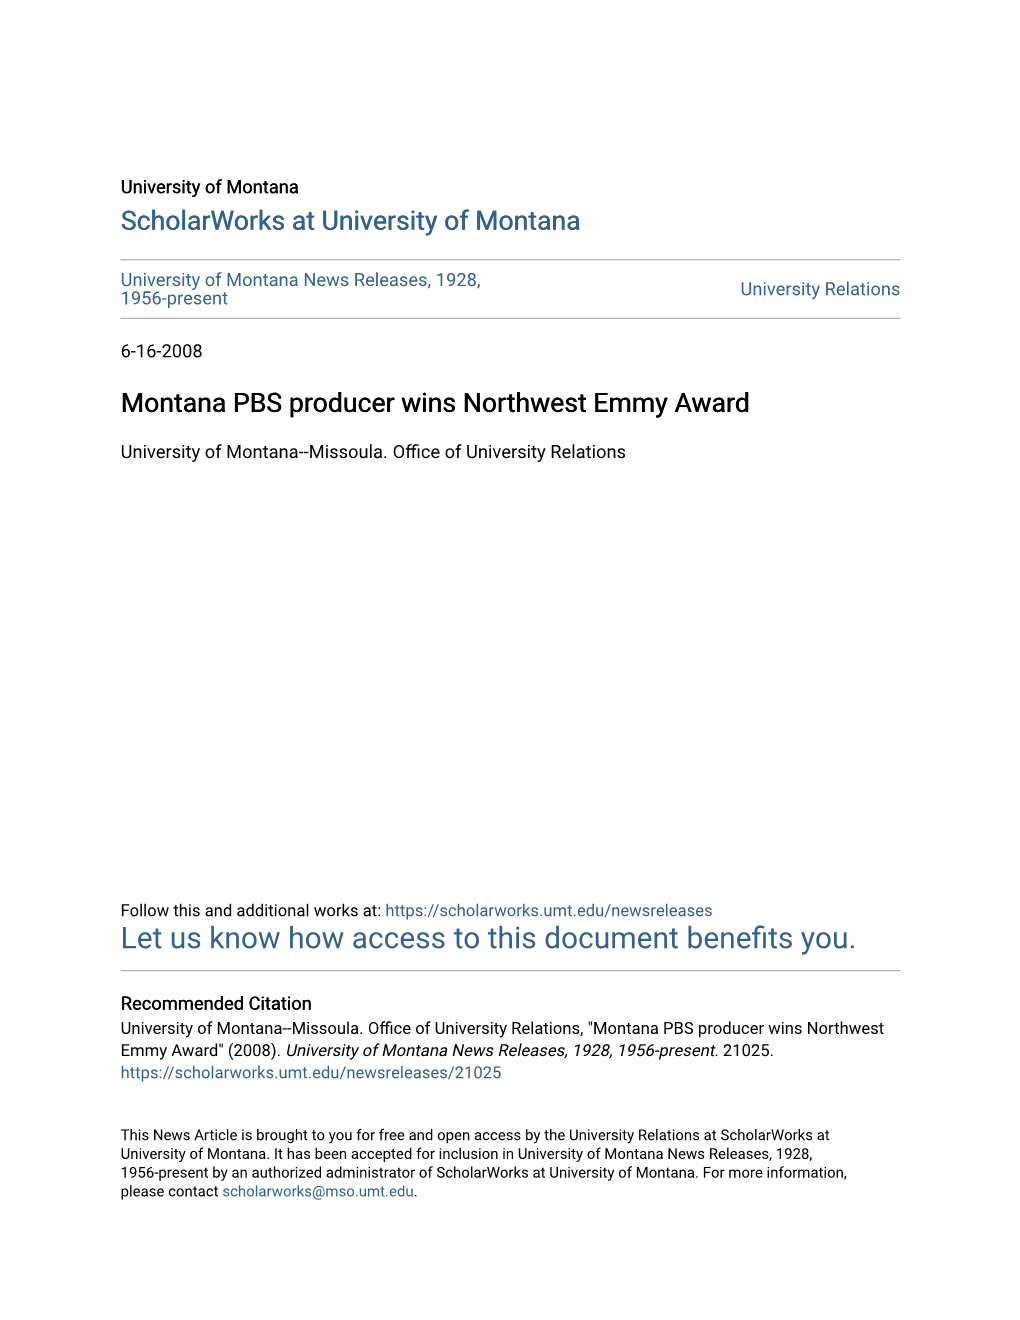 Montana PBS Producer Wins Northwest Emmy Award